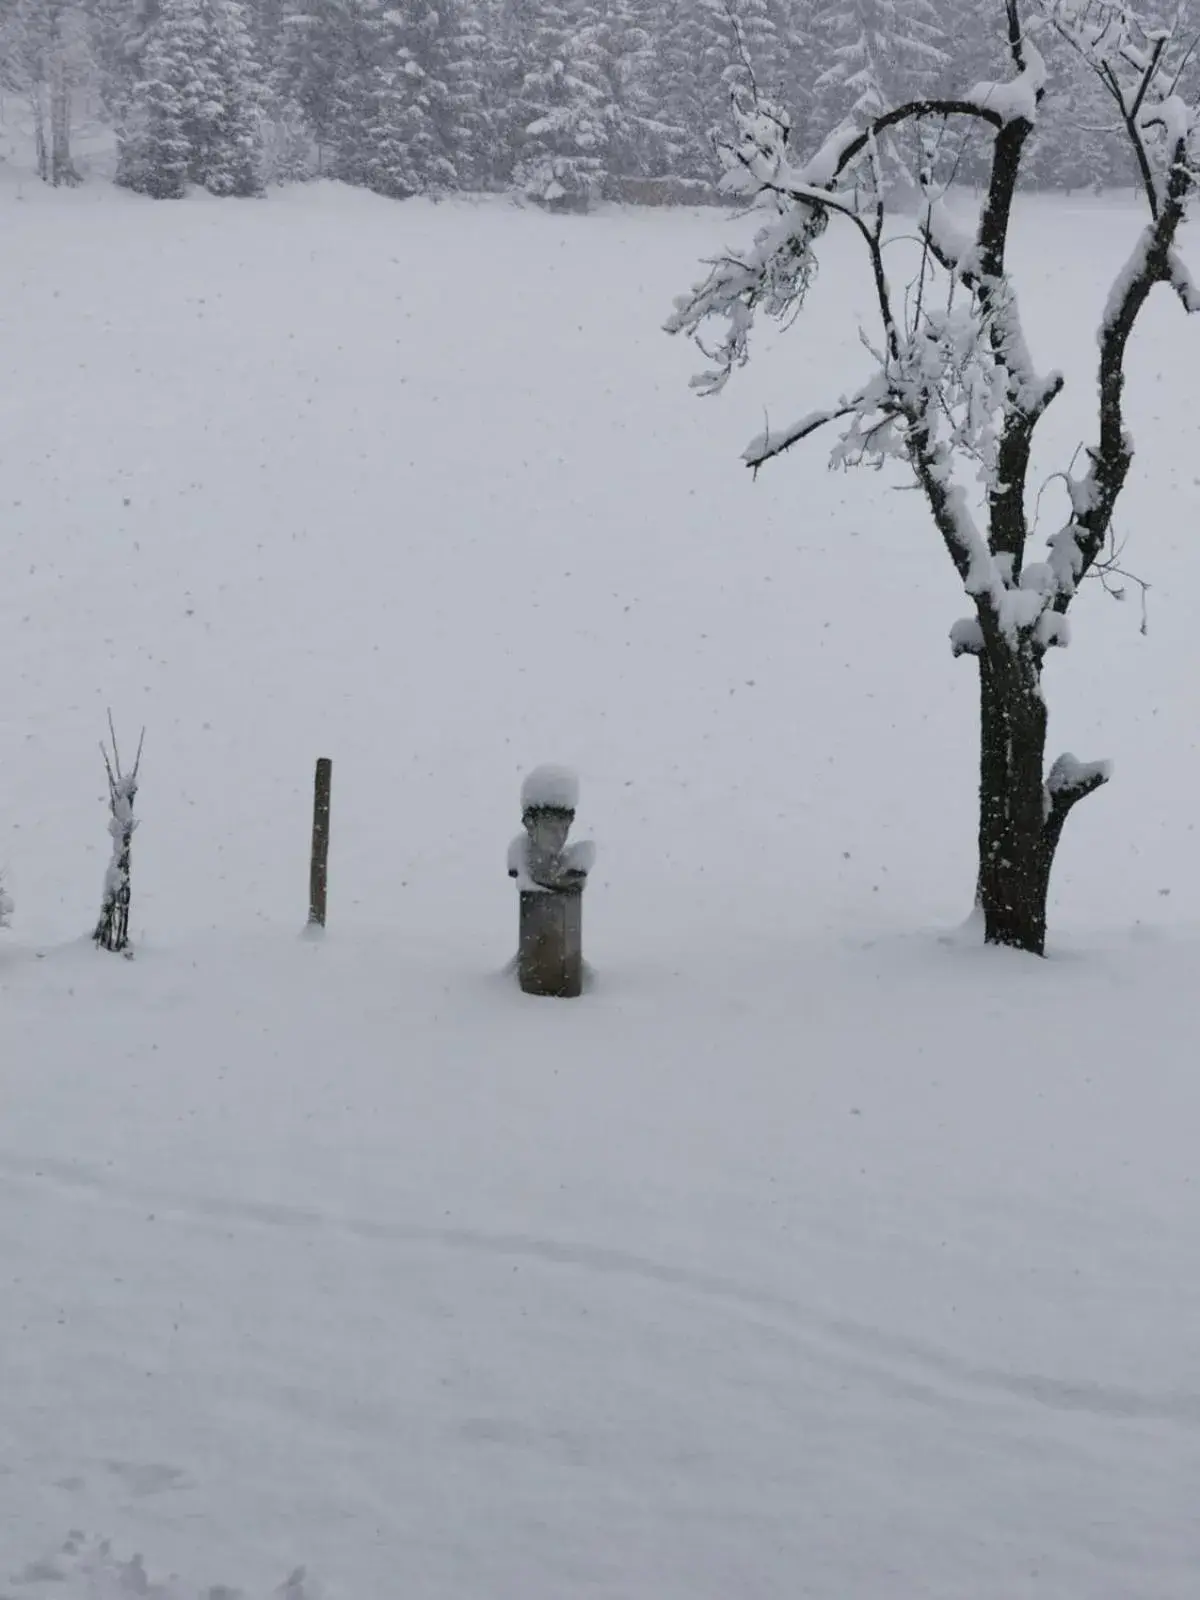 Winter in Alpenhof